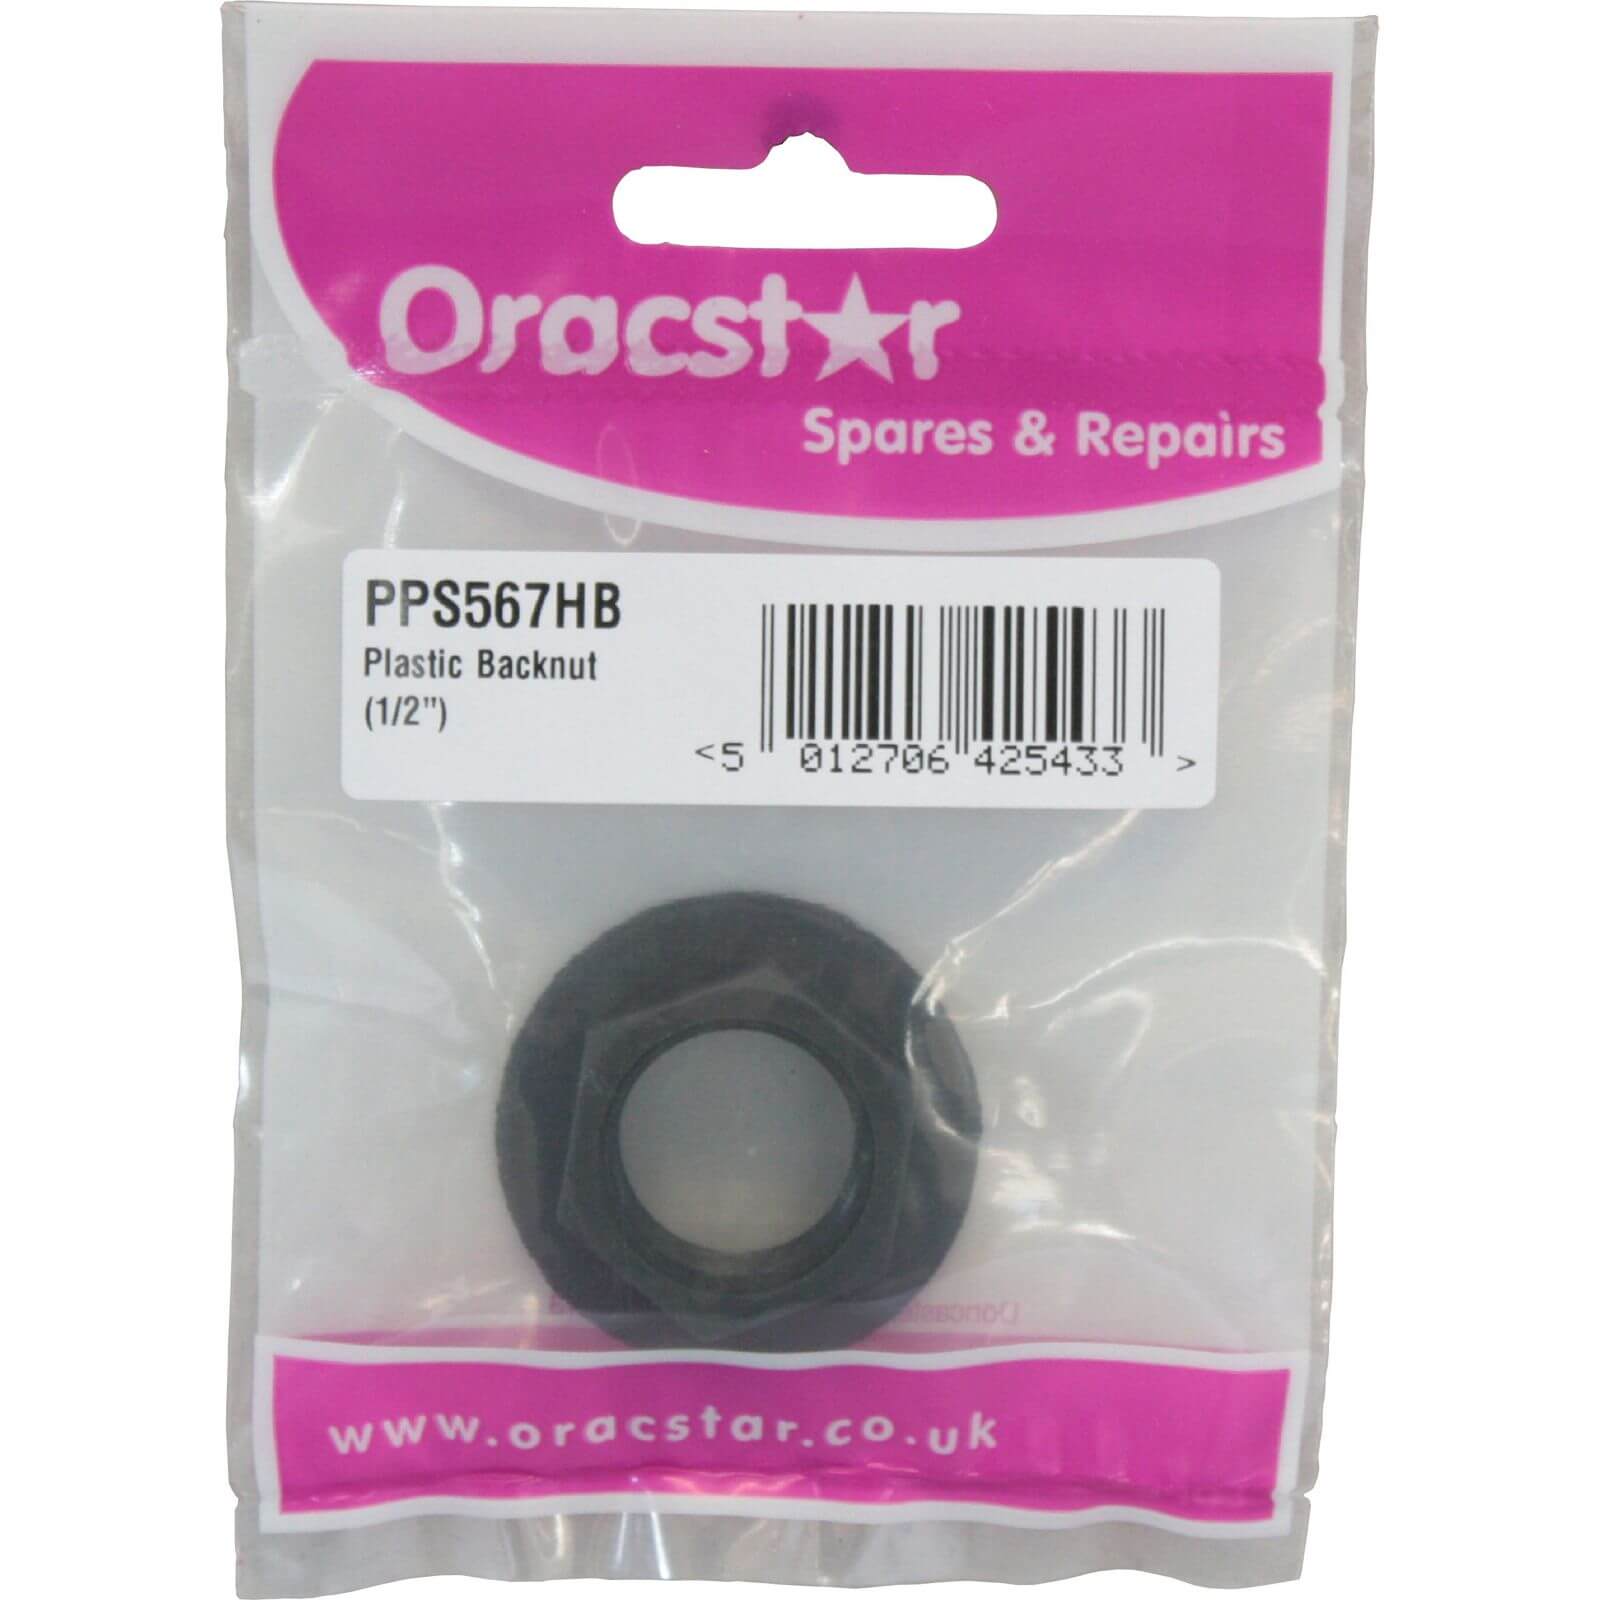 Oracstar 1/2 inch Plastic Backnut